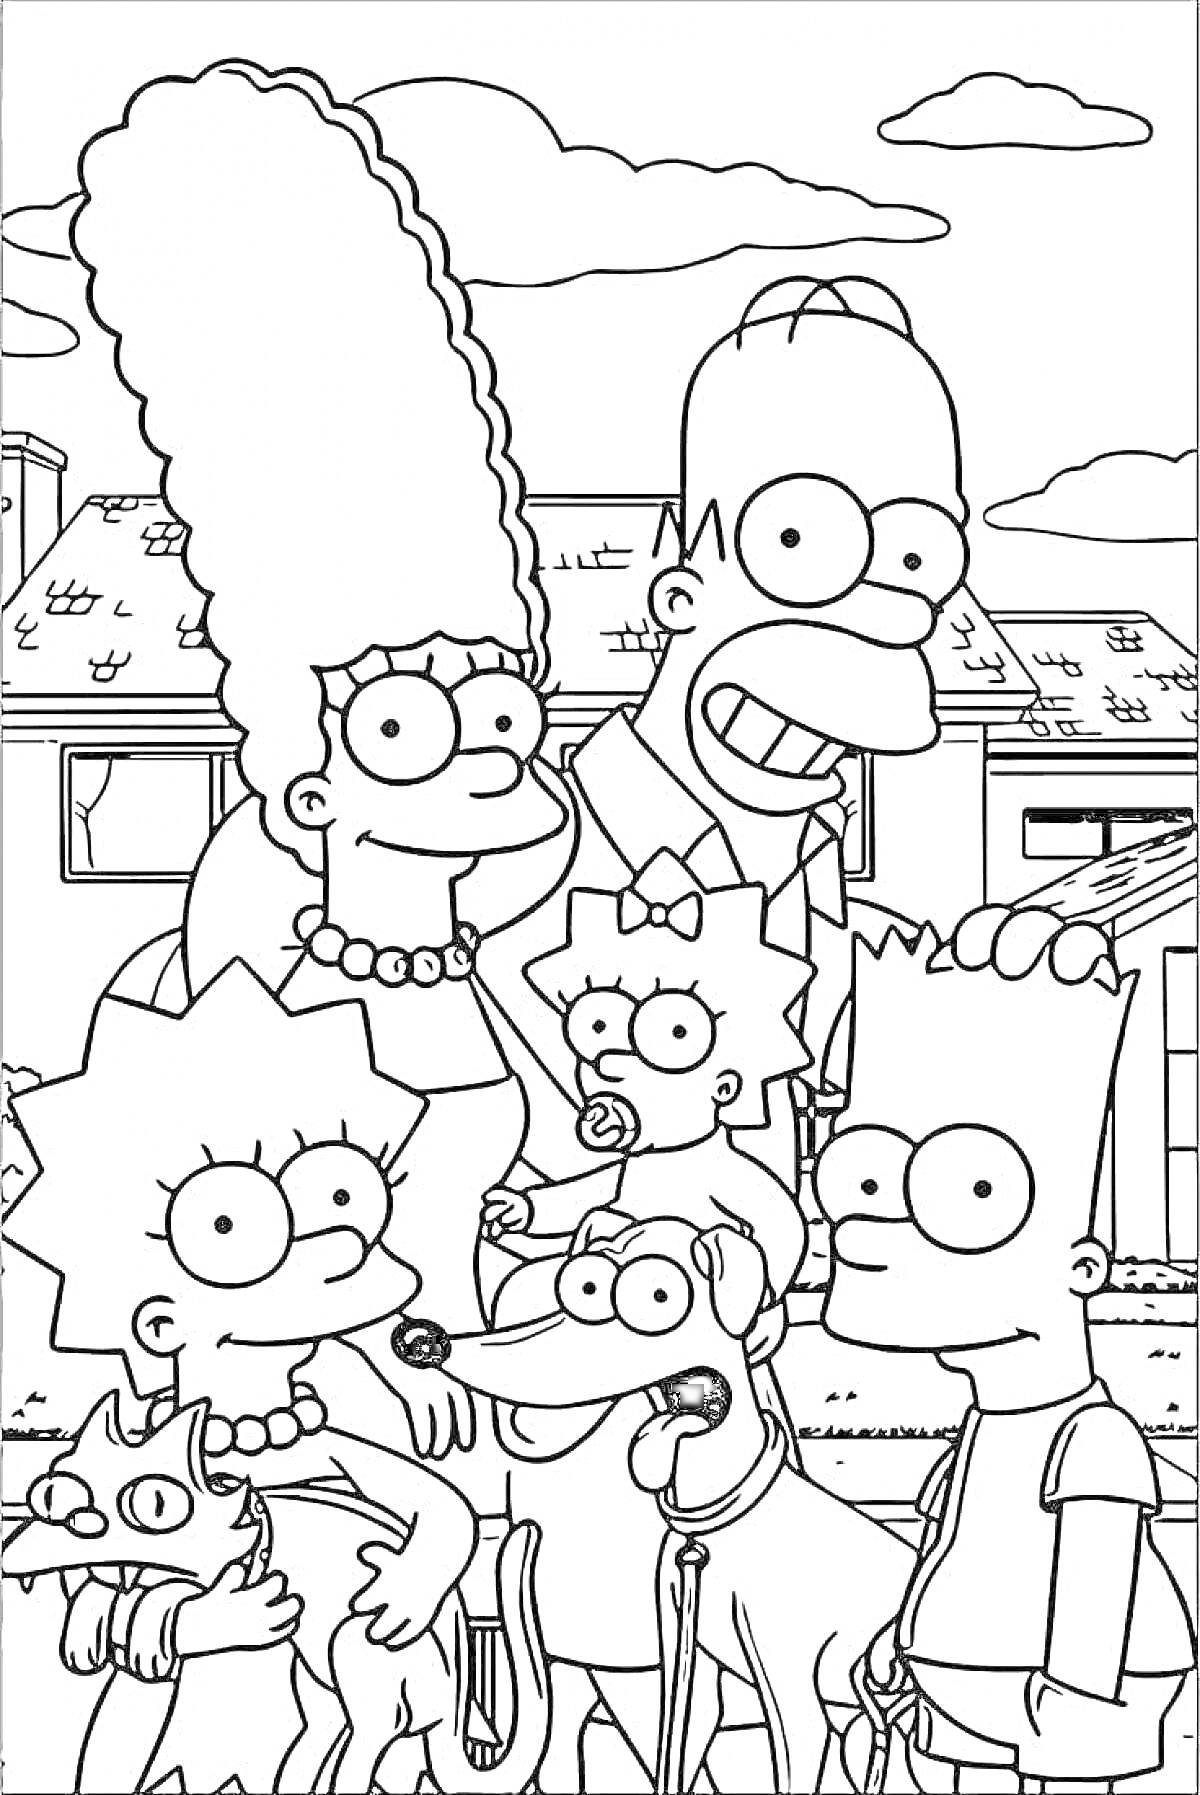 Раскраска Семья Симпсонов на фоне дома, включая Мардж, Гомера, Лизу, Мэгги, Барта, Санта Литл Хелпера и Снежинку